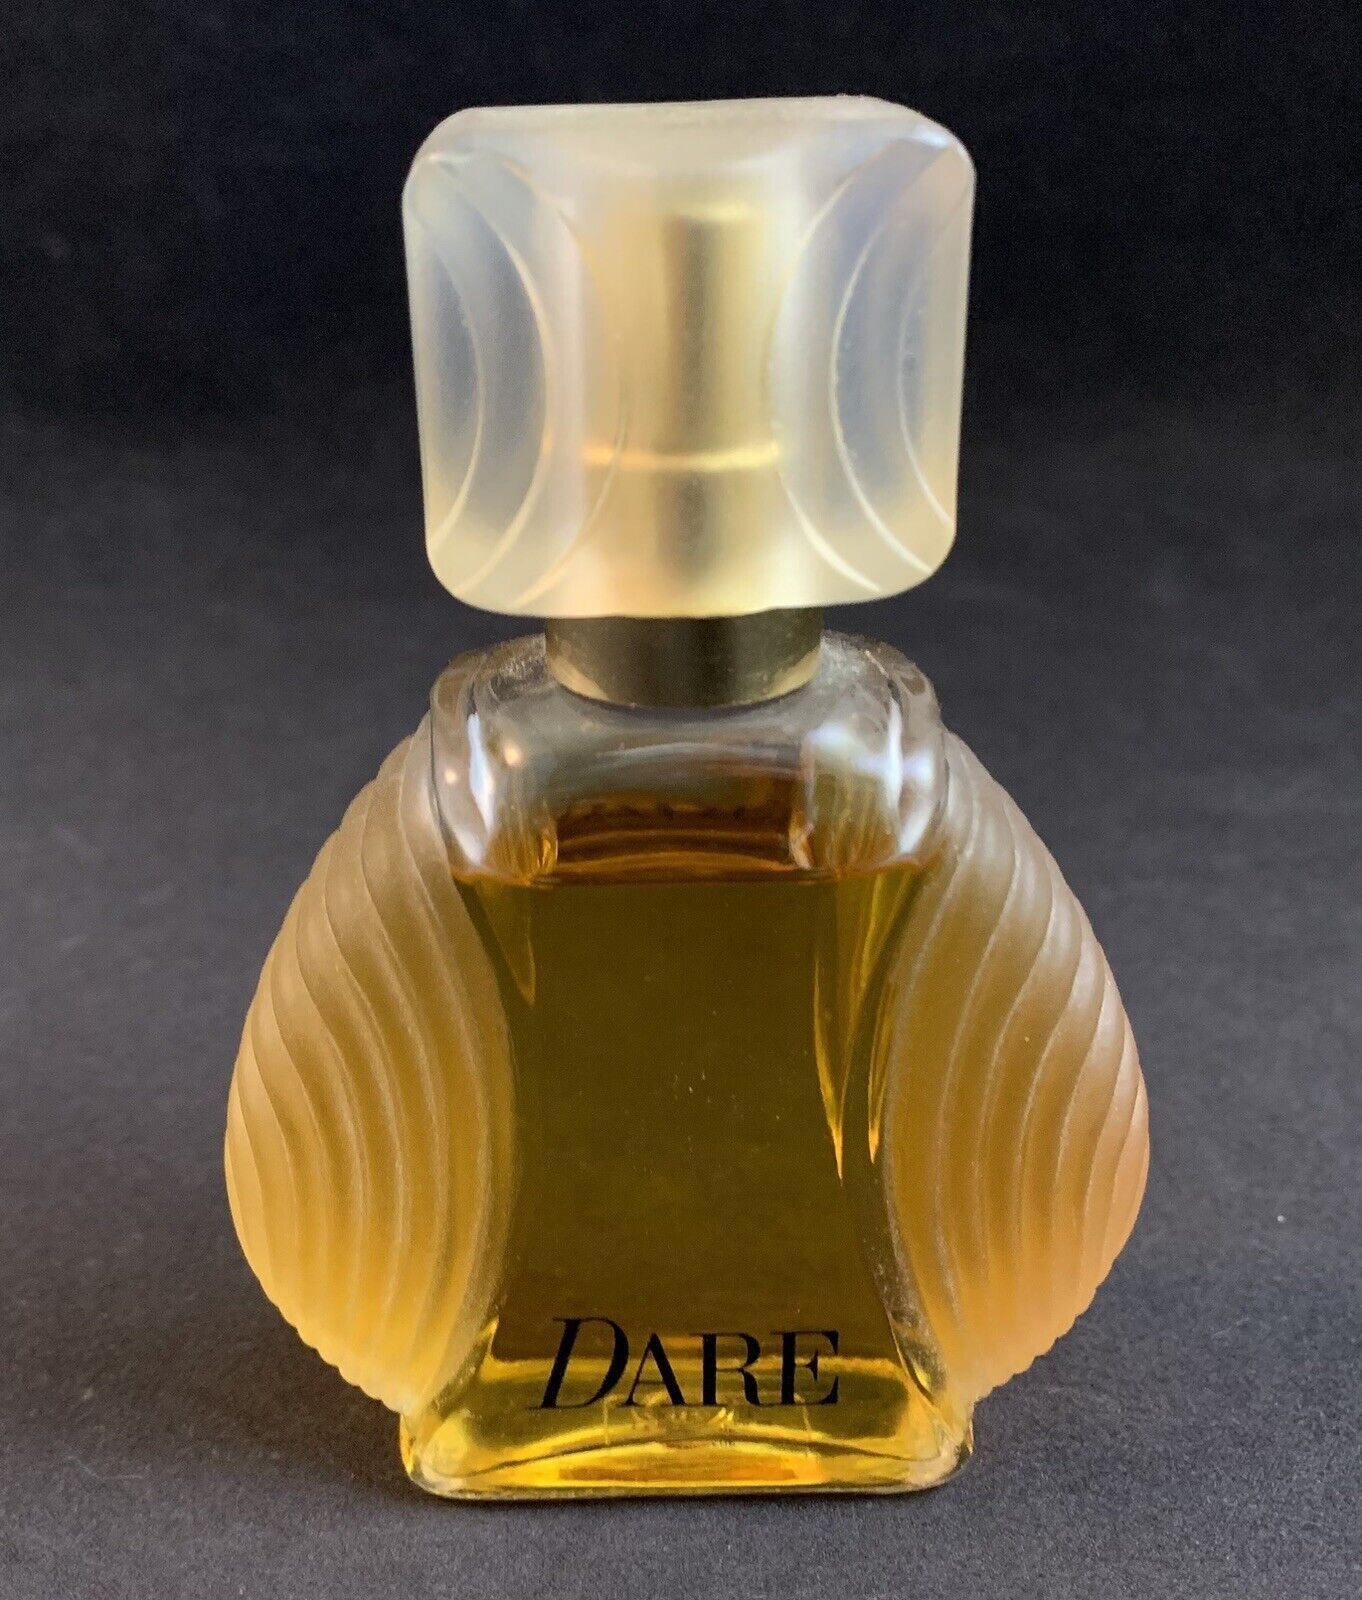 Vintage Quintessence Dare EDP Eau de Parfum 1.7FL Oz. 50mL Perfume Spray